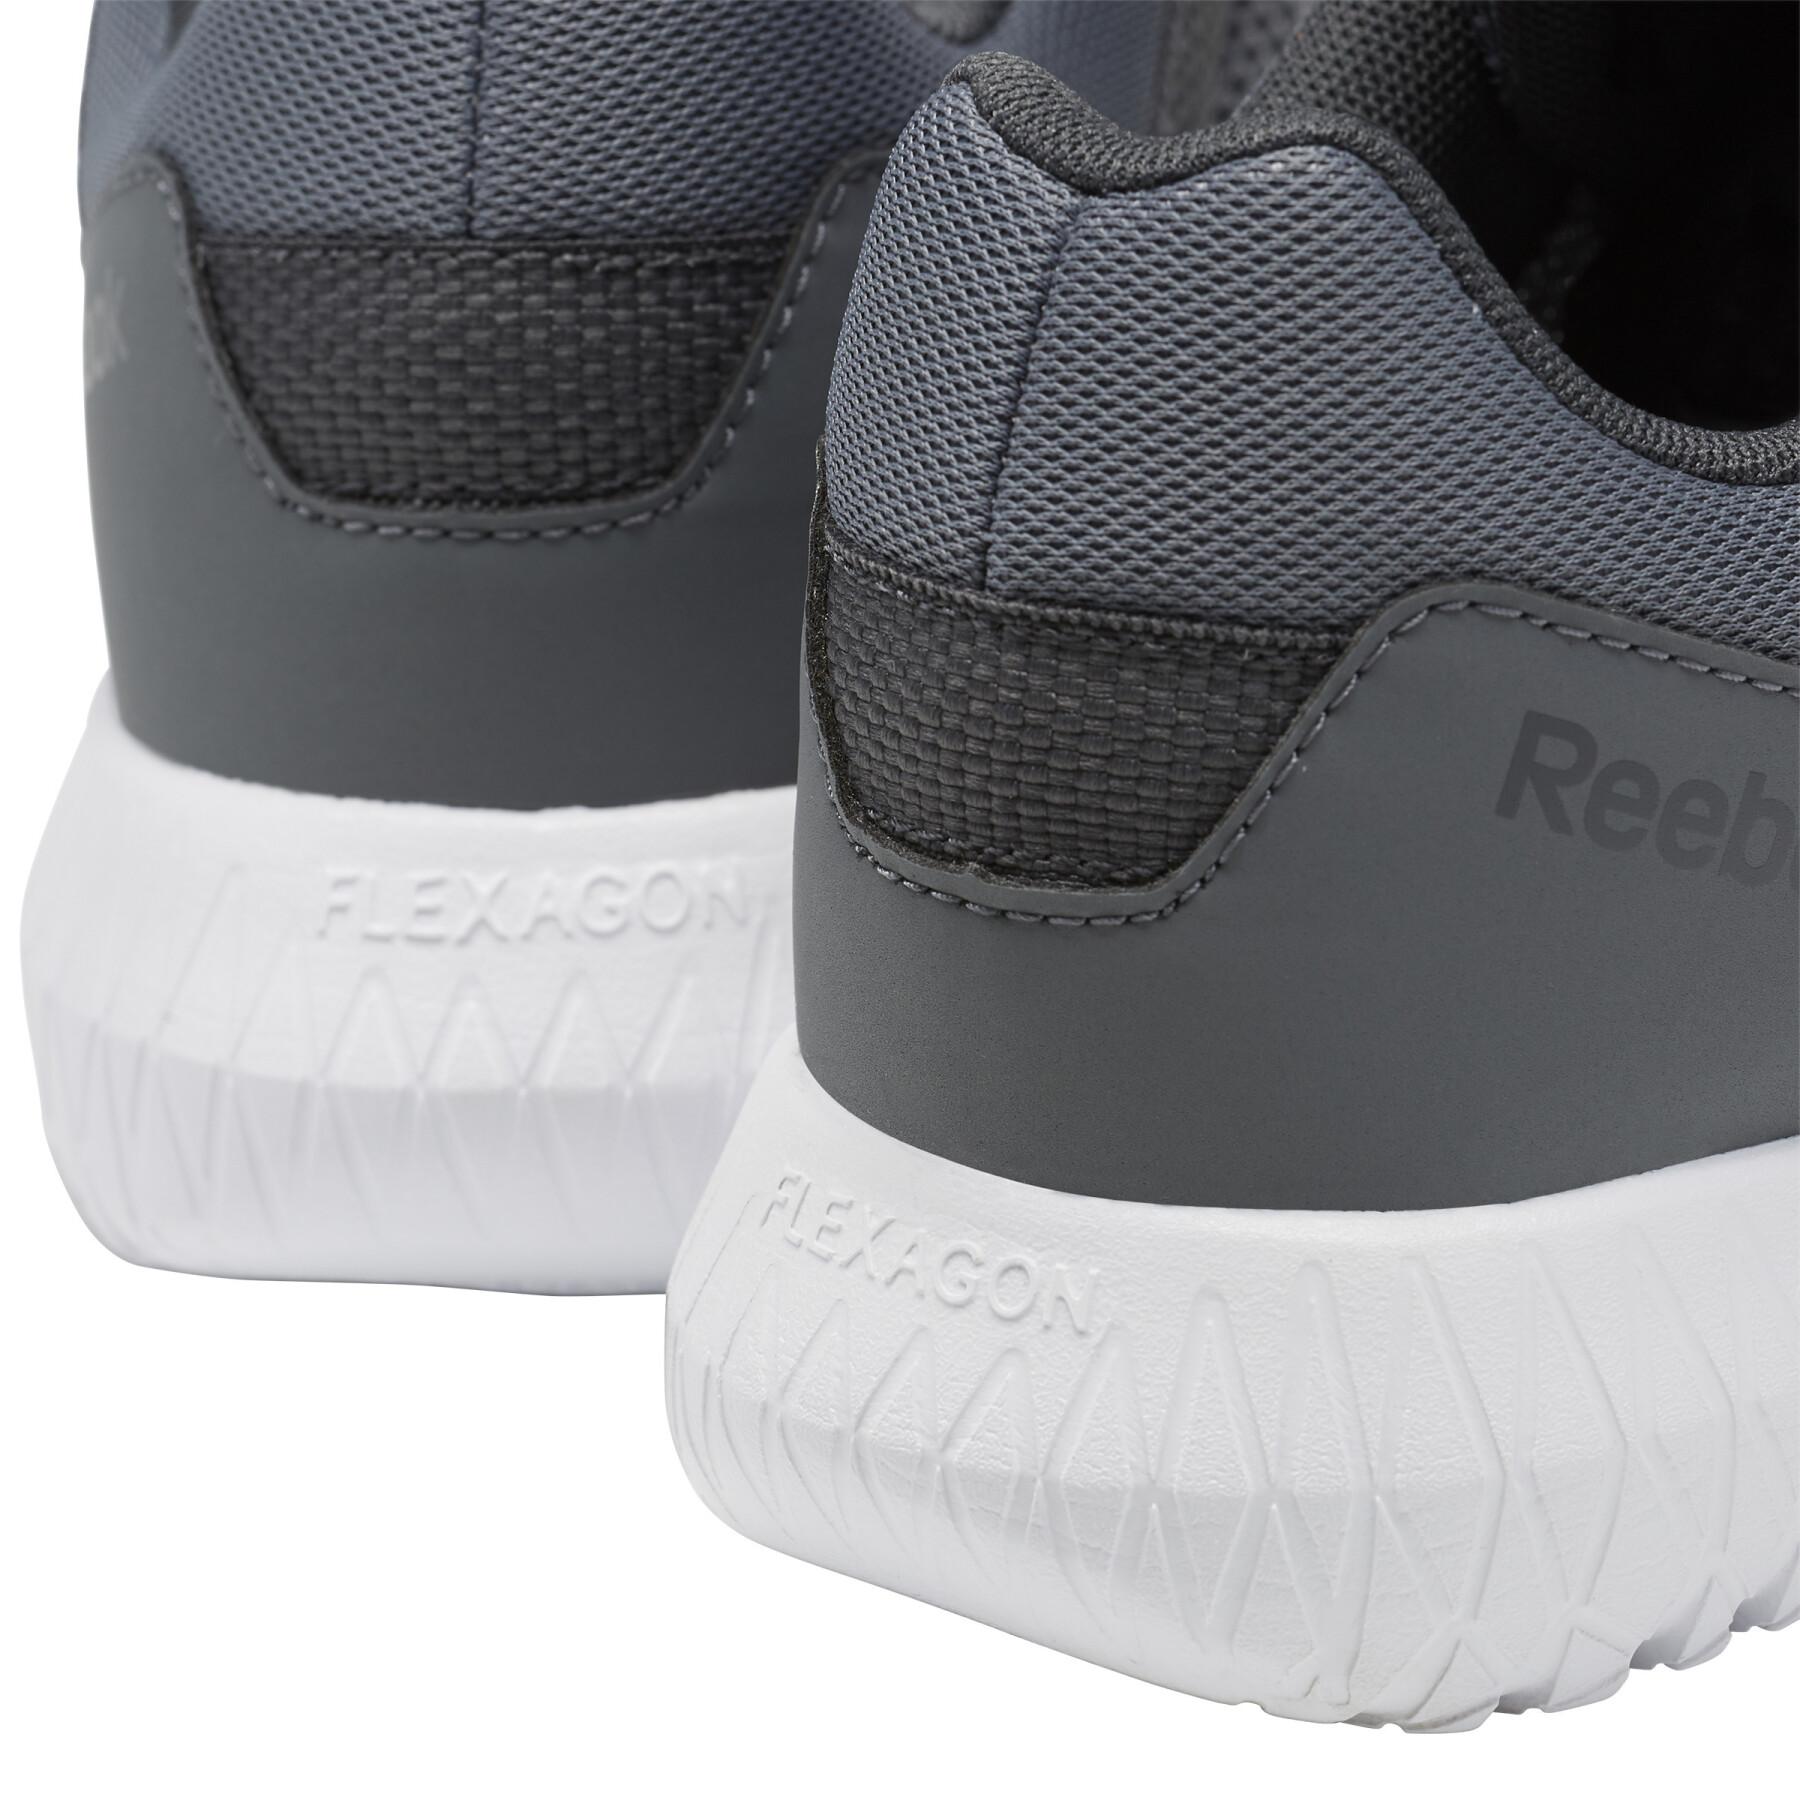 Chaussures Reebok Flexagon Energy